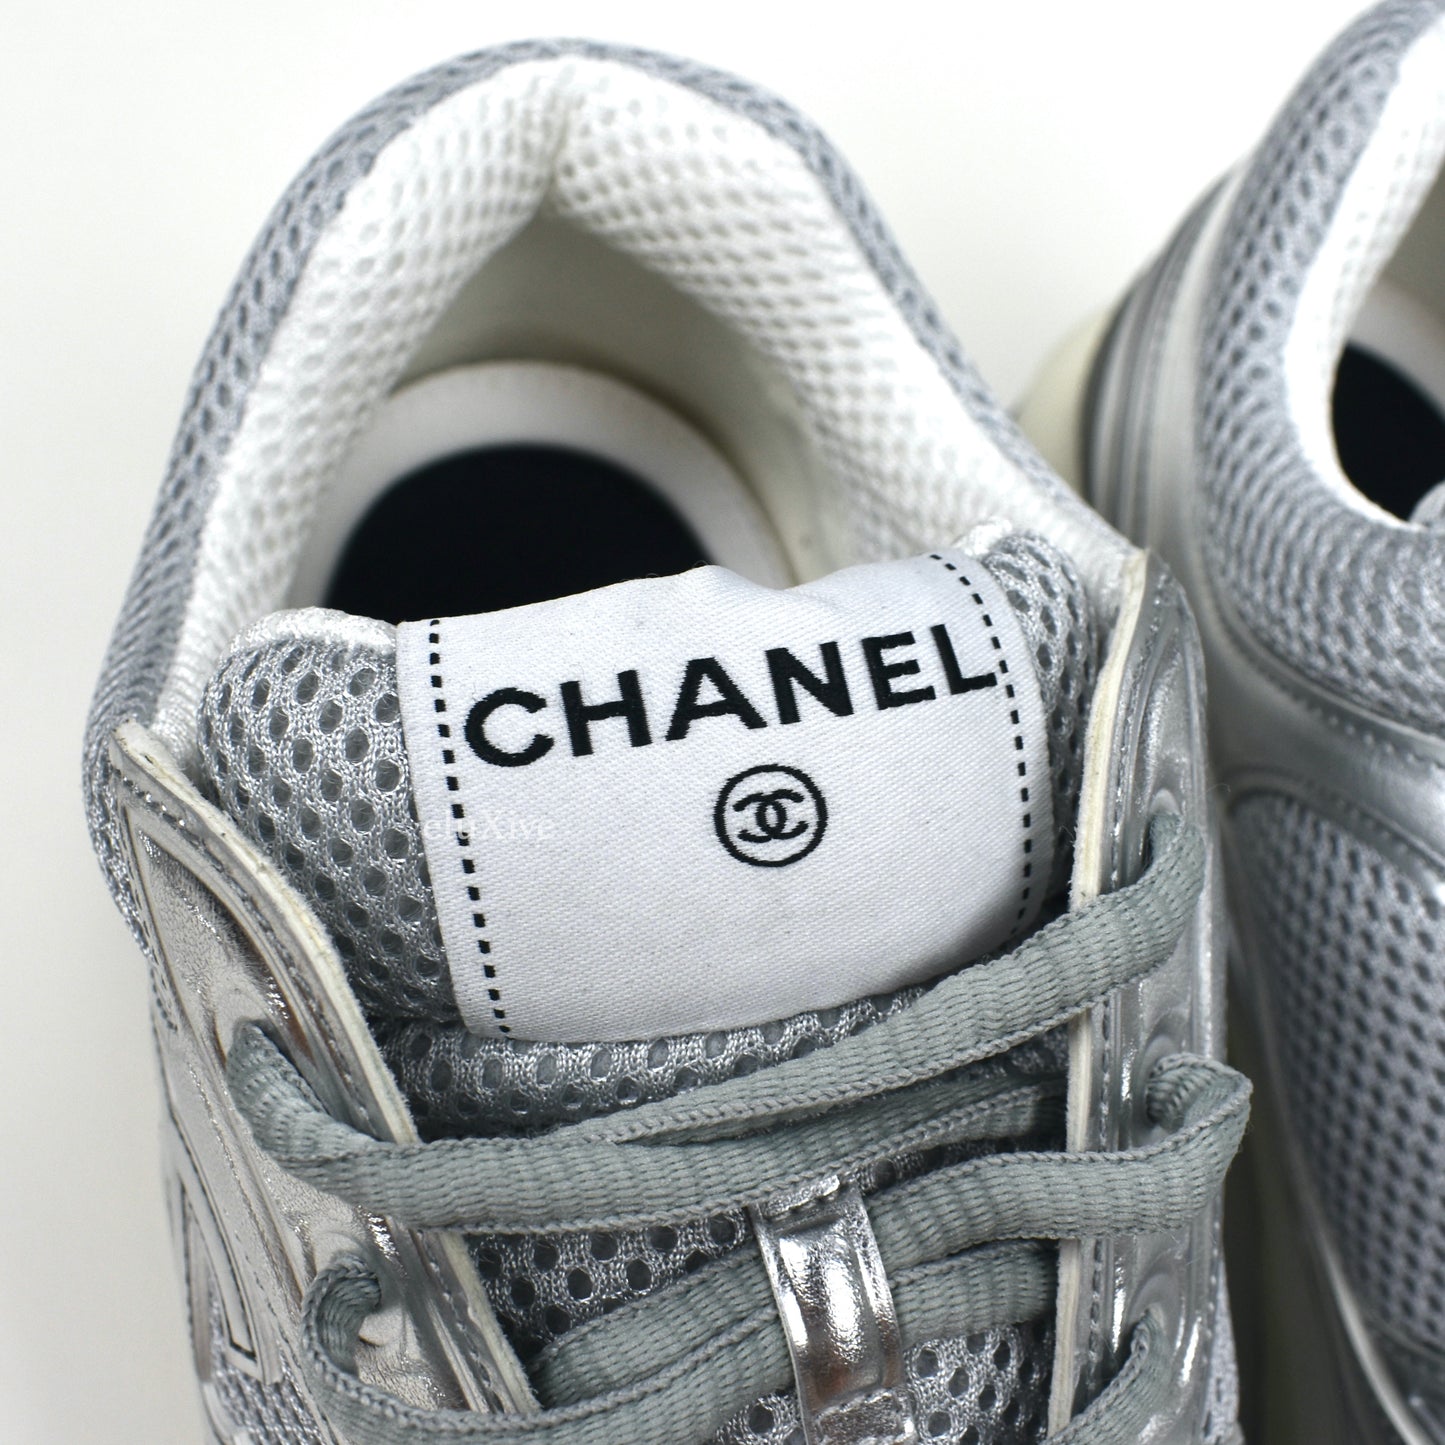 Chanel - Classic Monogram Logo Trainer (Metallic Silver)